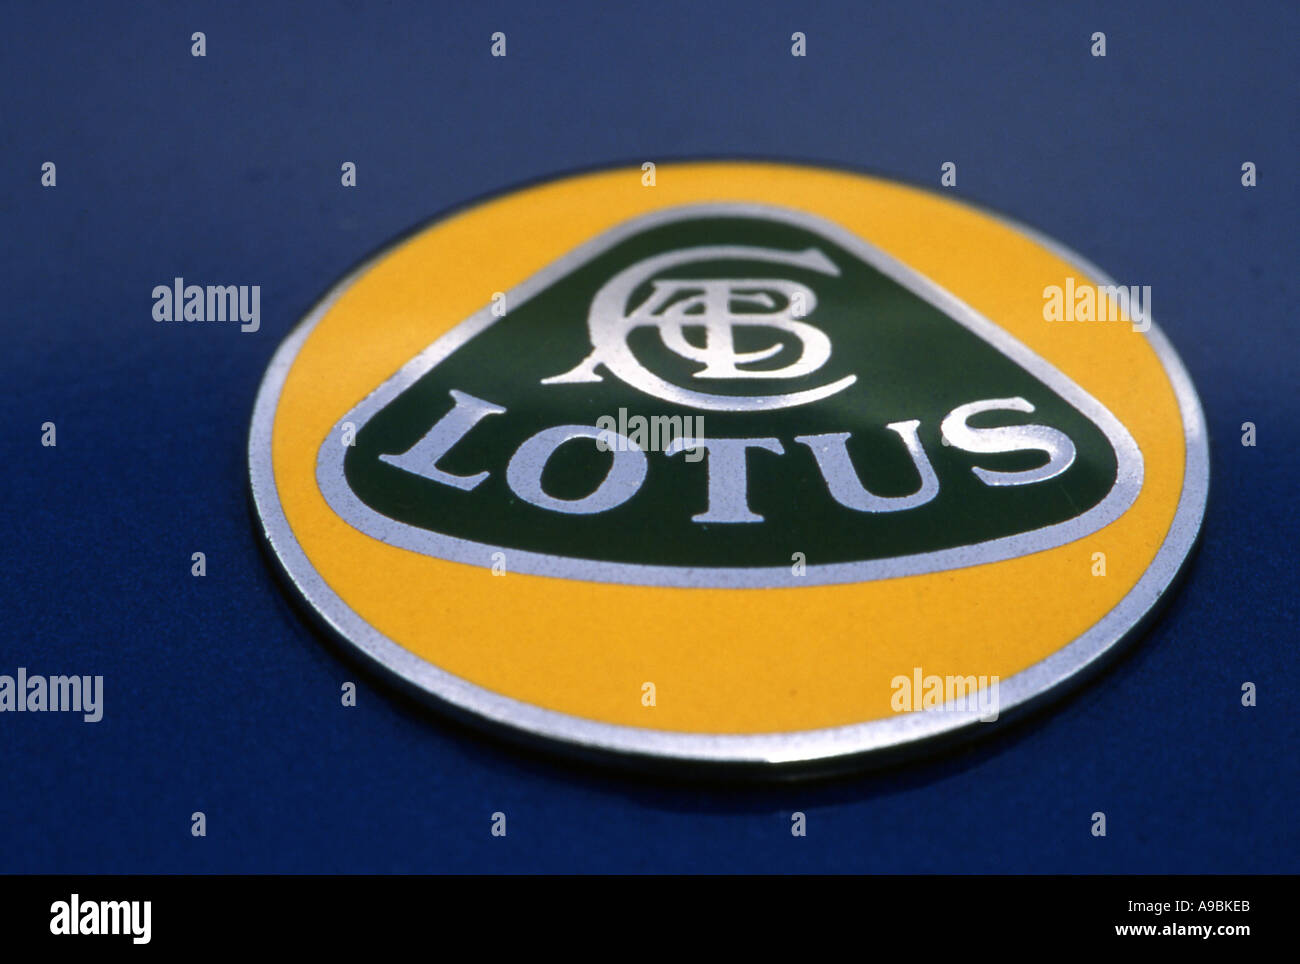 Lotus Car Badge Stock Photo 4020202 Alamy